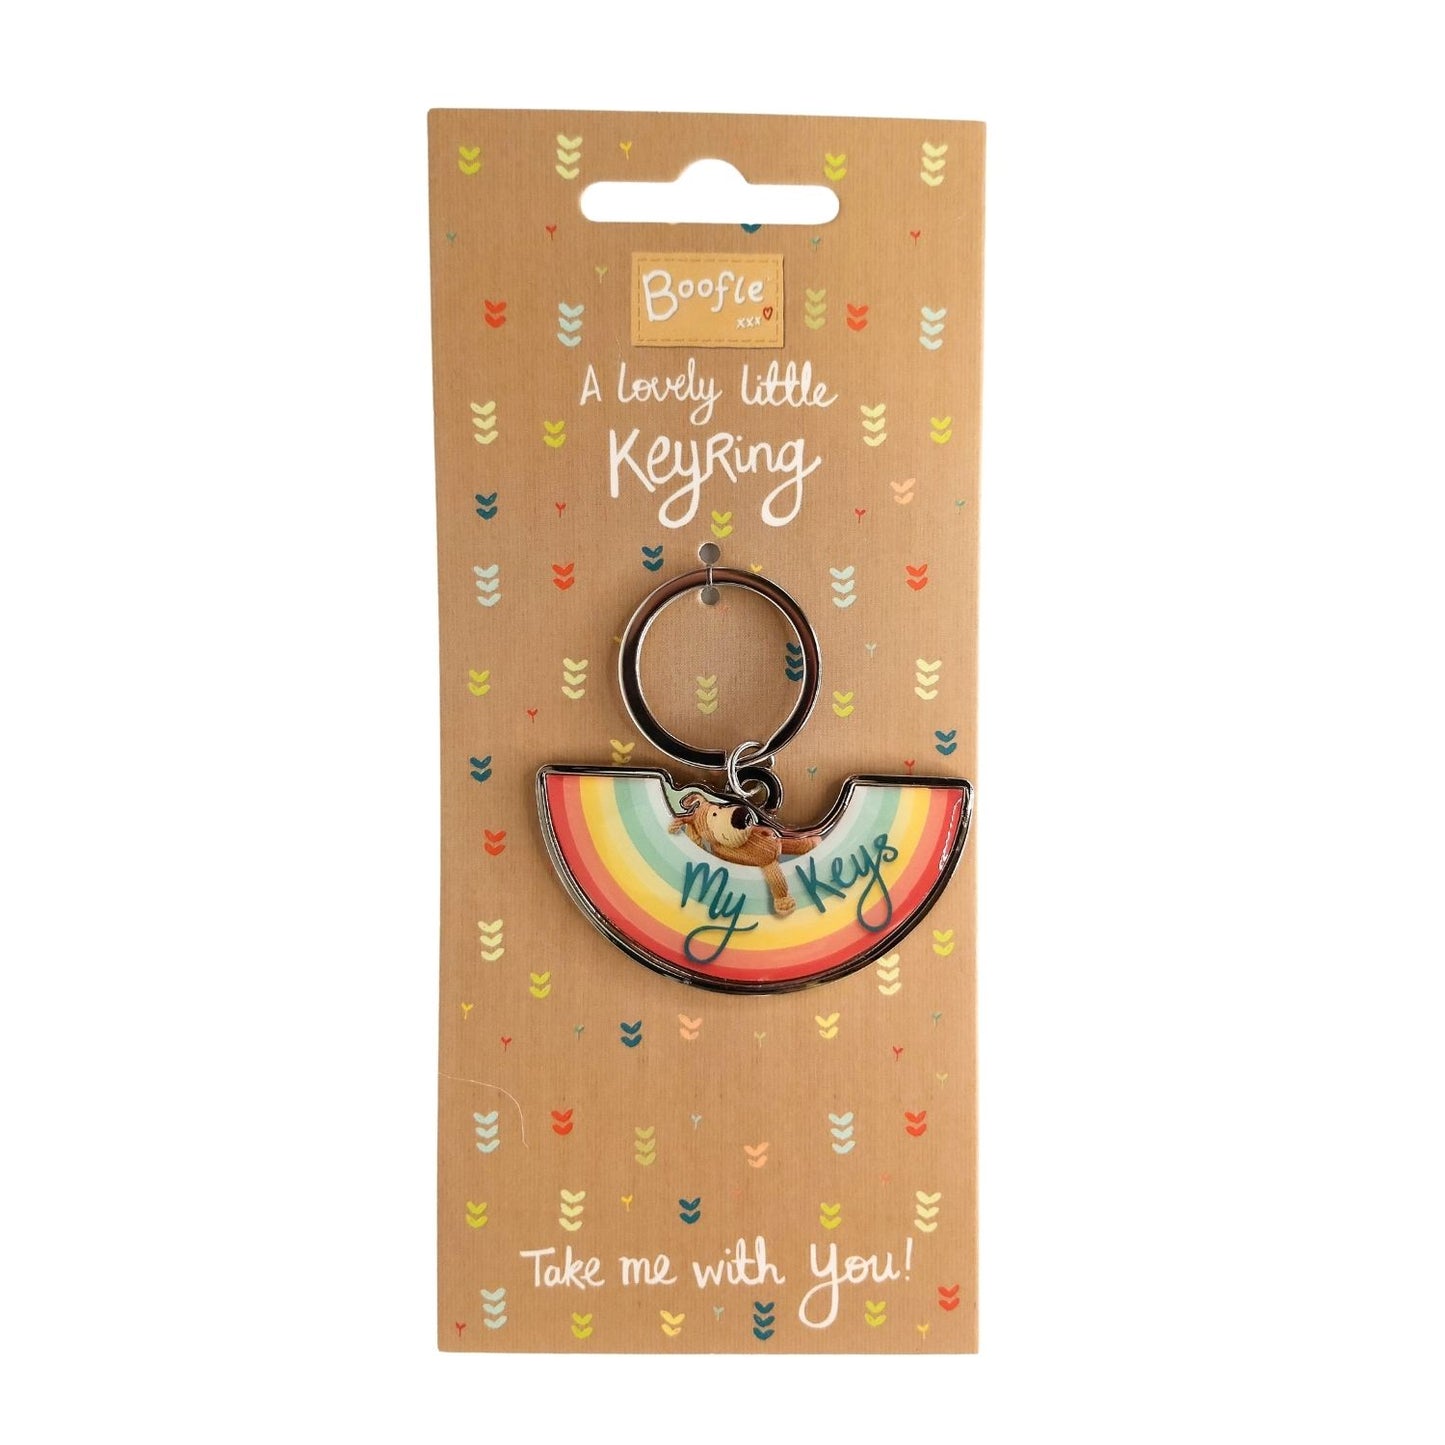 Boofle My Keys Rainbow Nap Time! Keyring Gift Idea